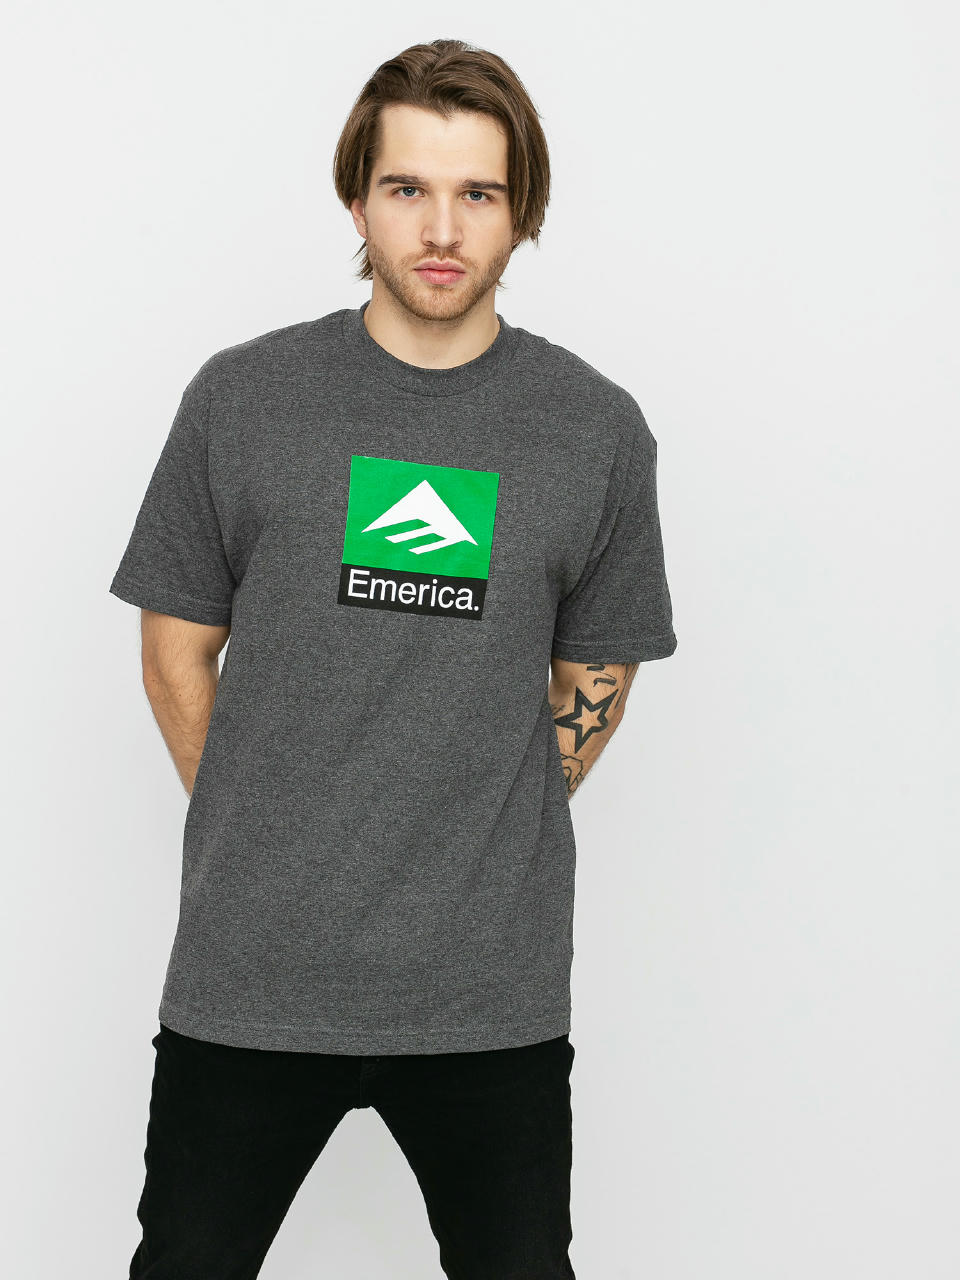 Emerica Classic Combo T-Shirt (charcoal/heather)